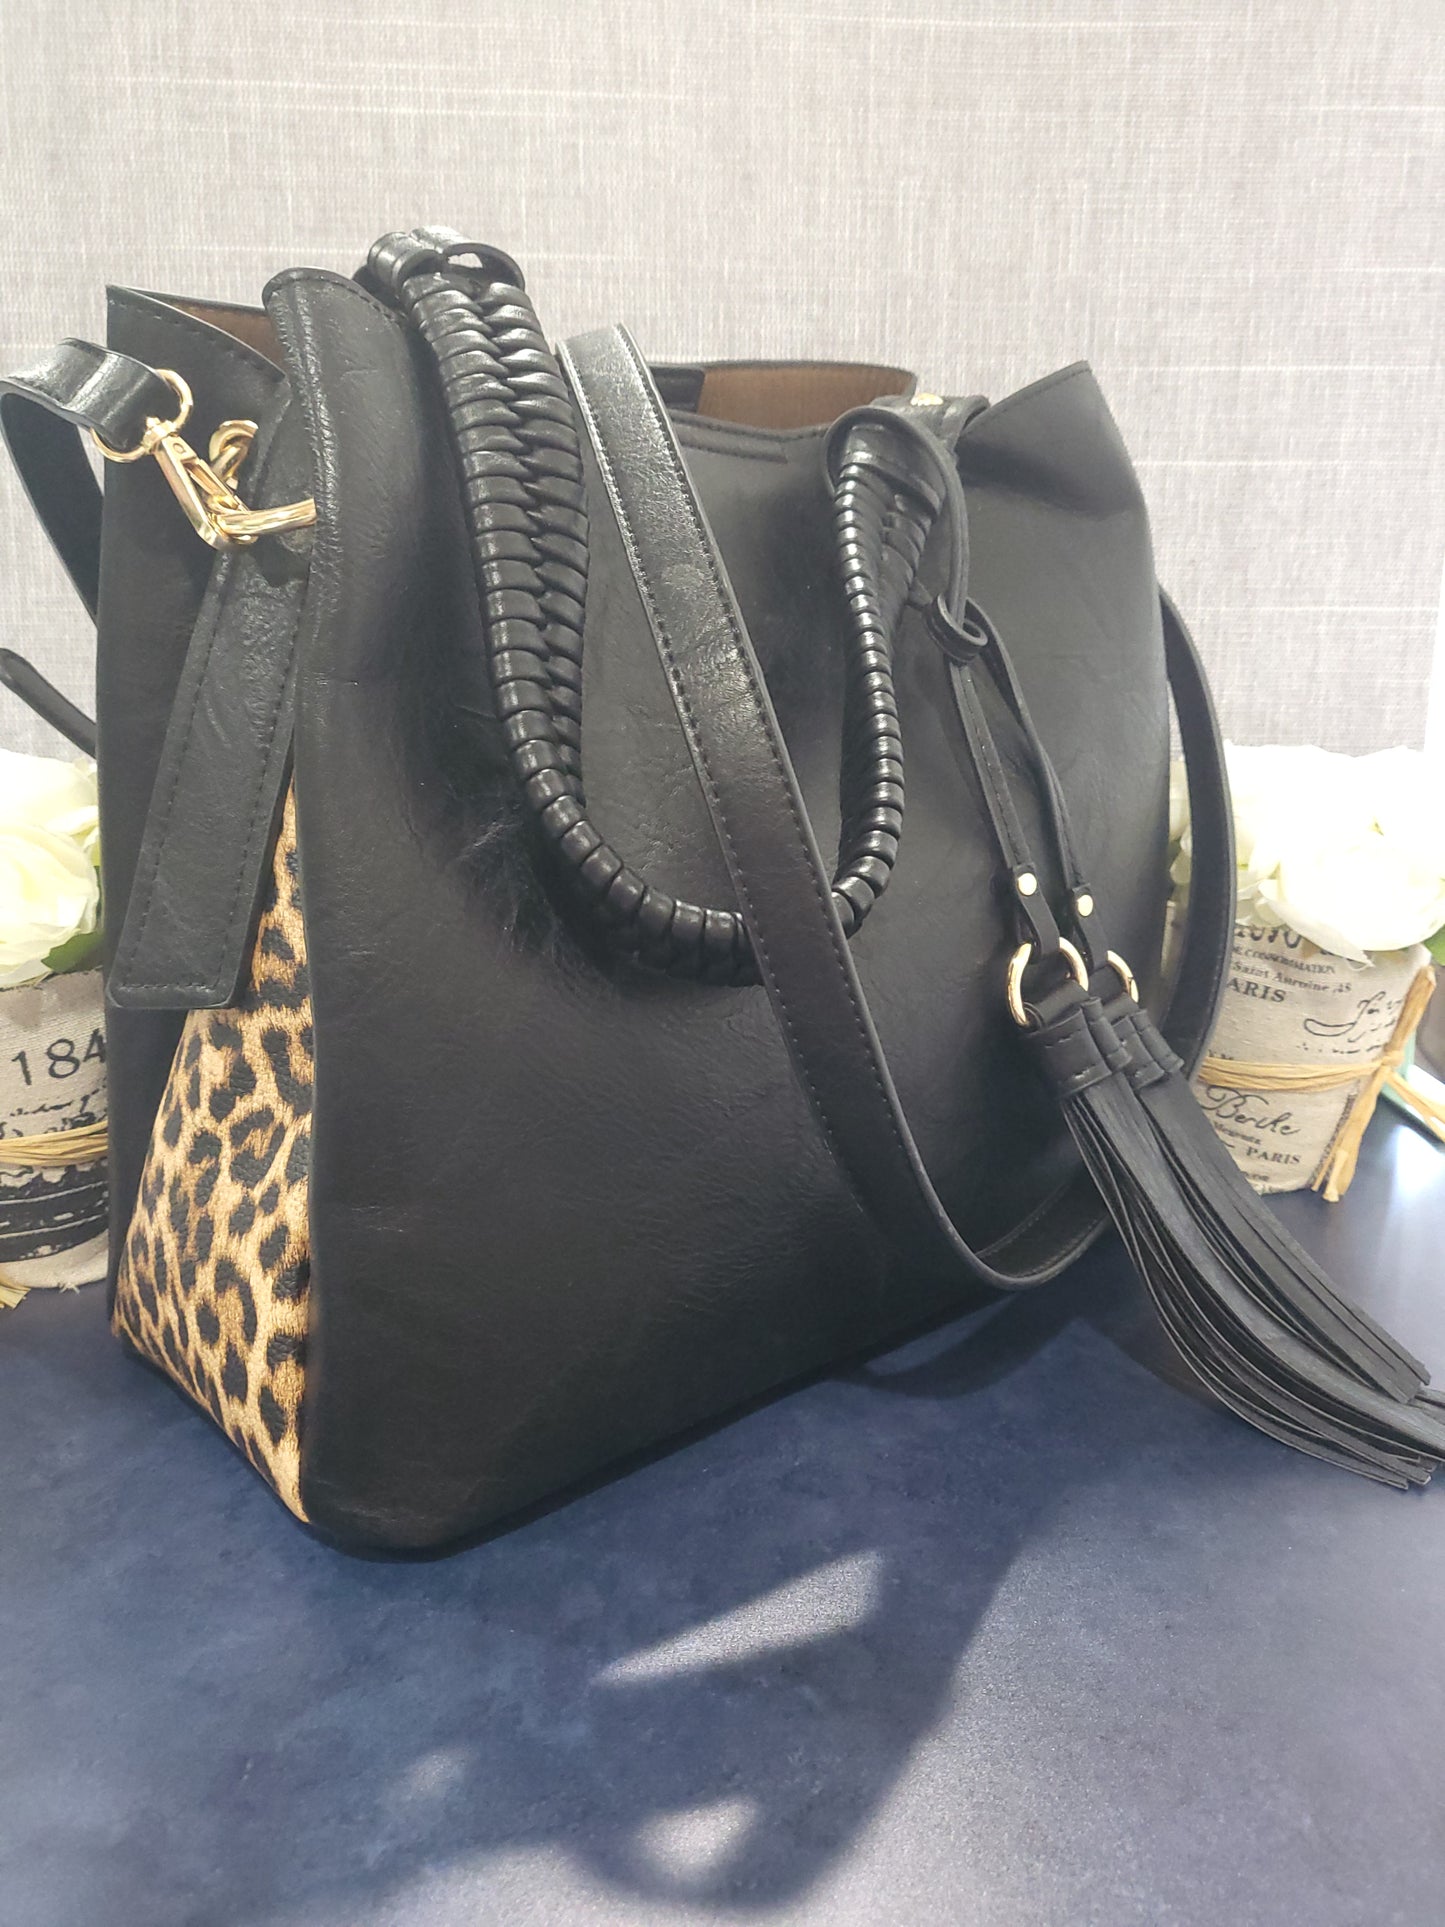 Hobo Black & Leopard Bag